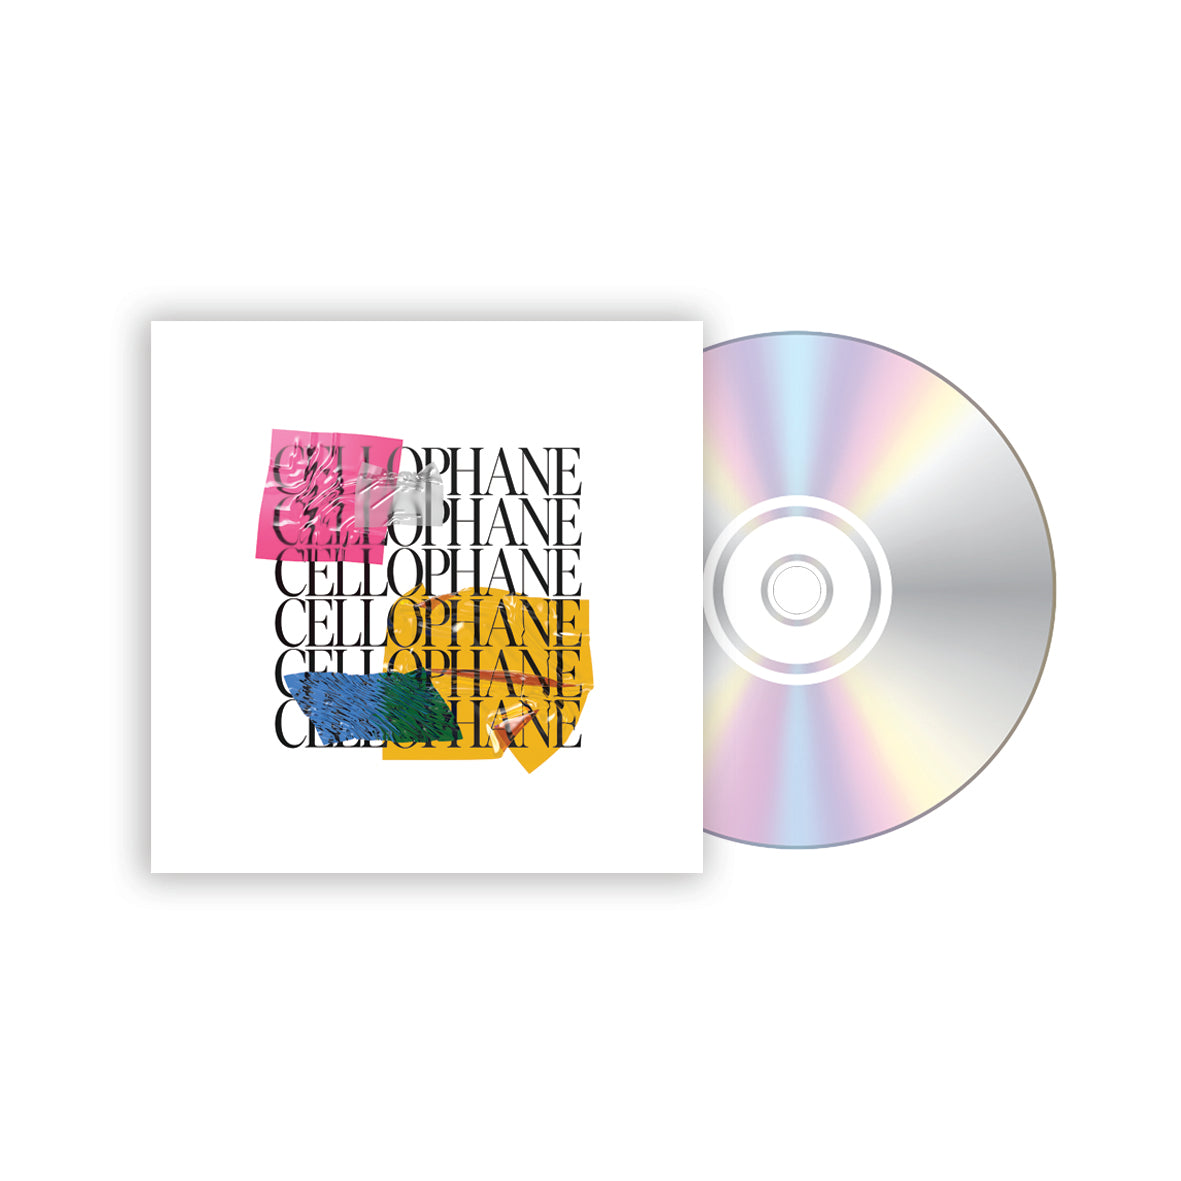 Cellophane CD (SIGNED)